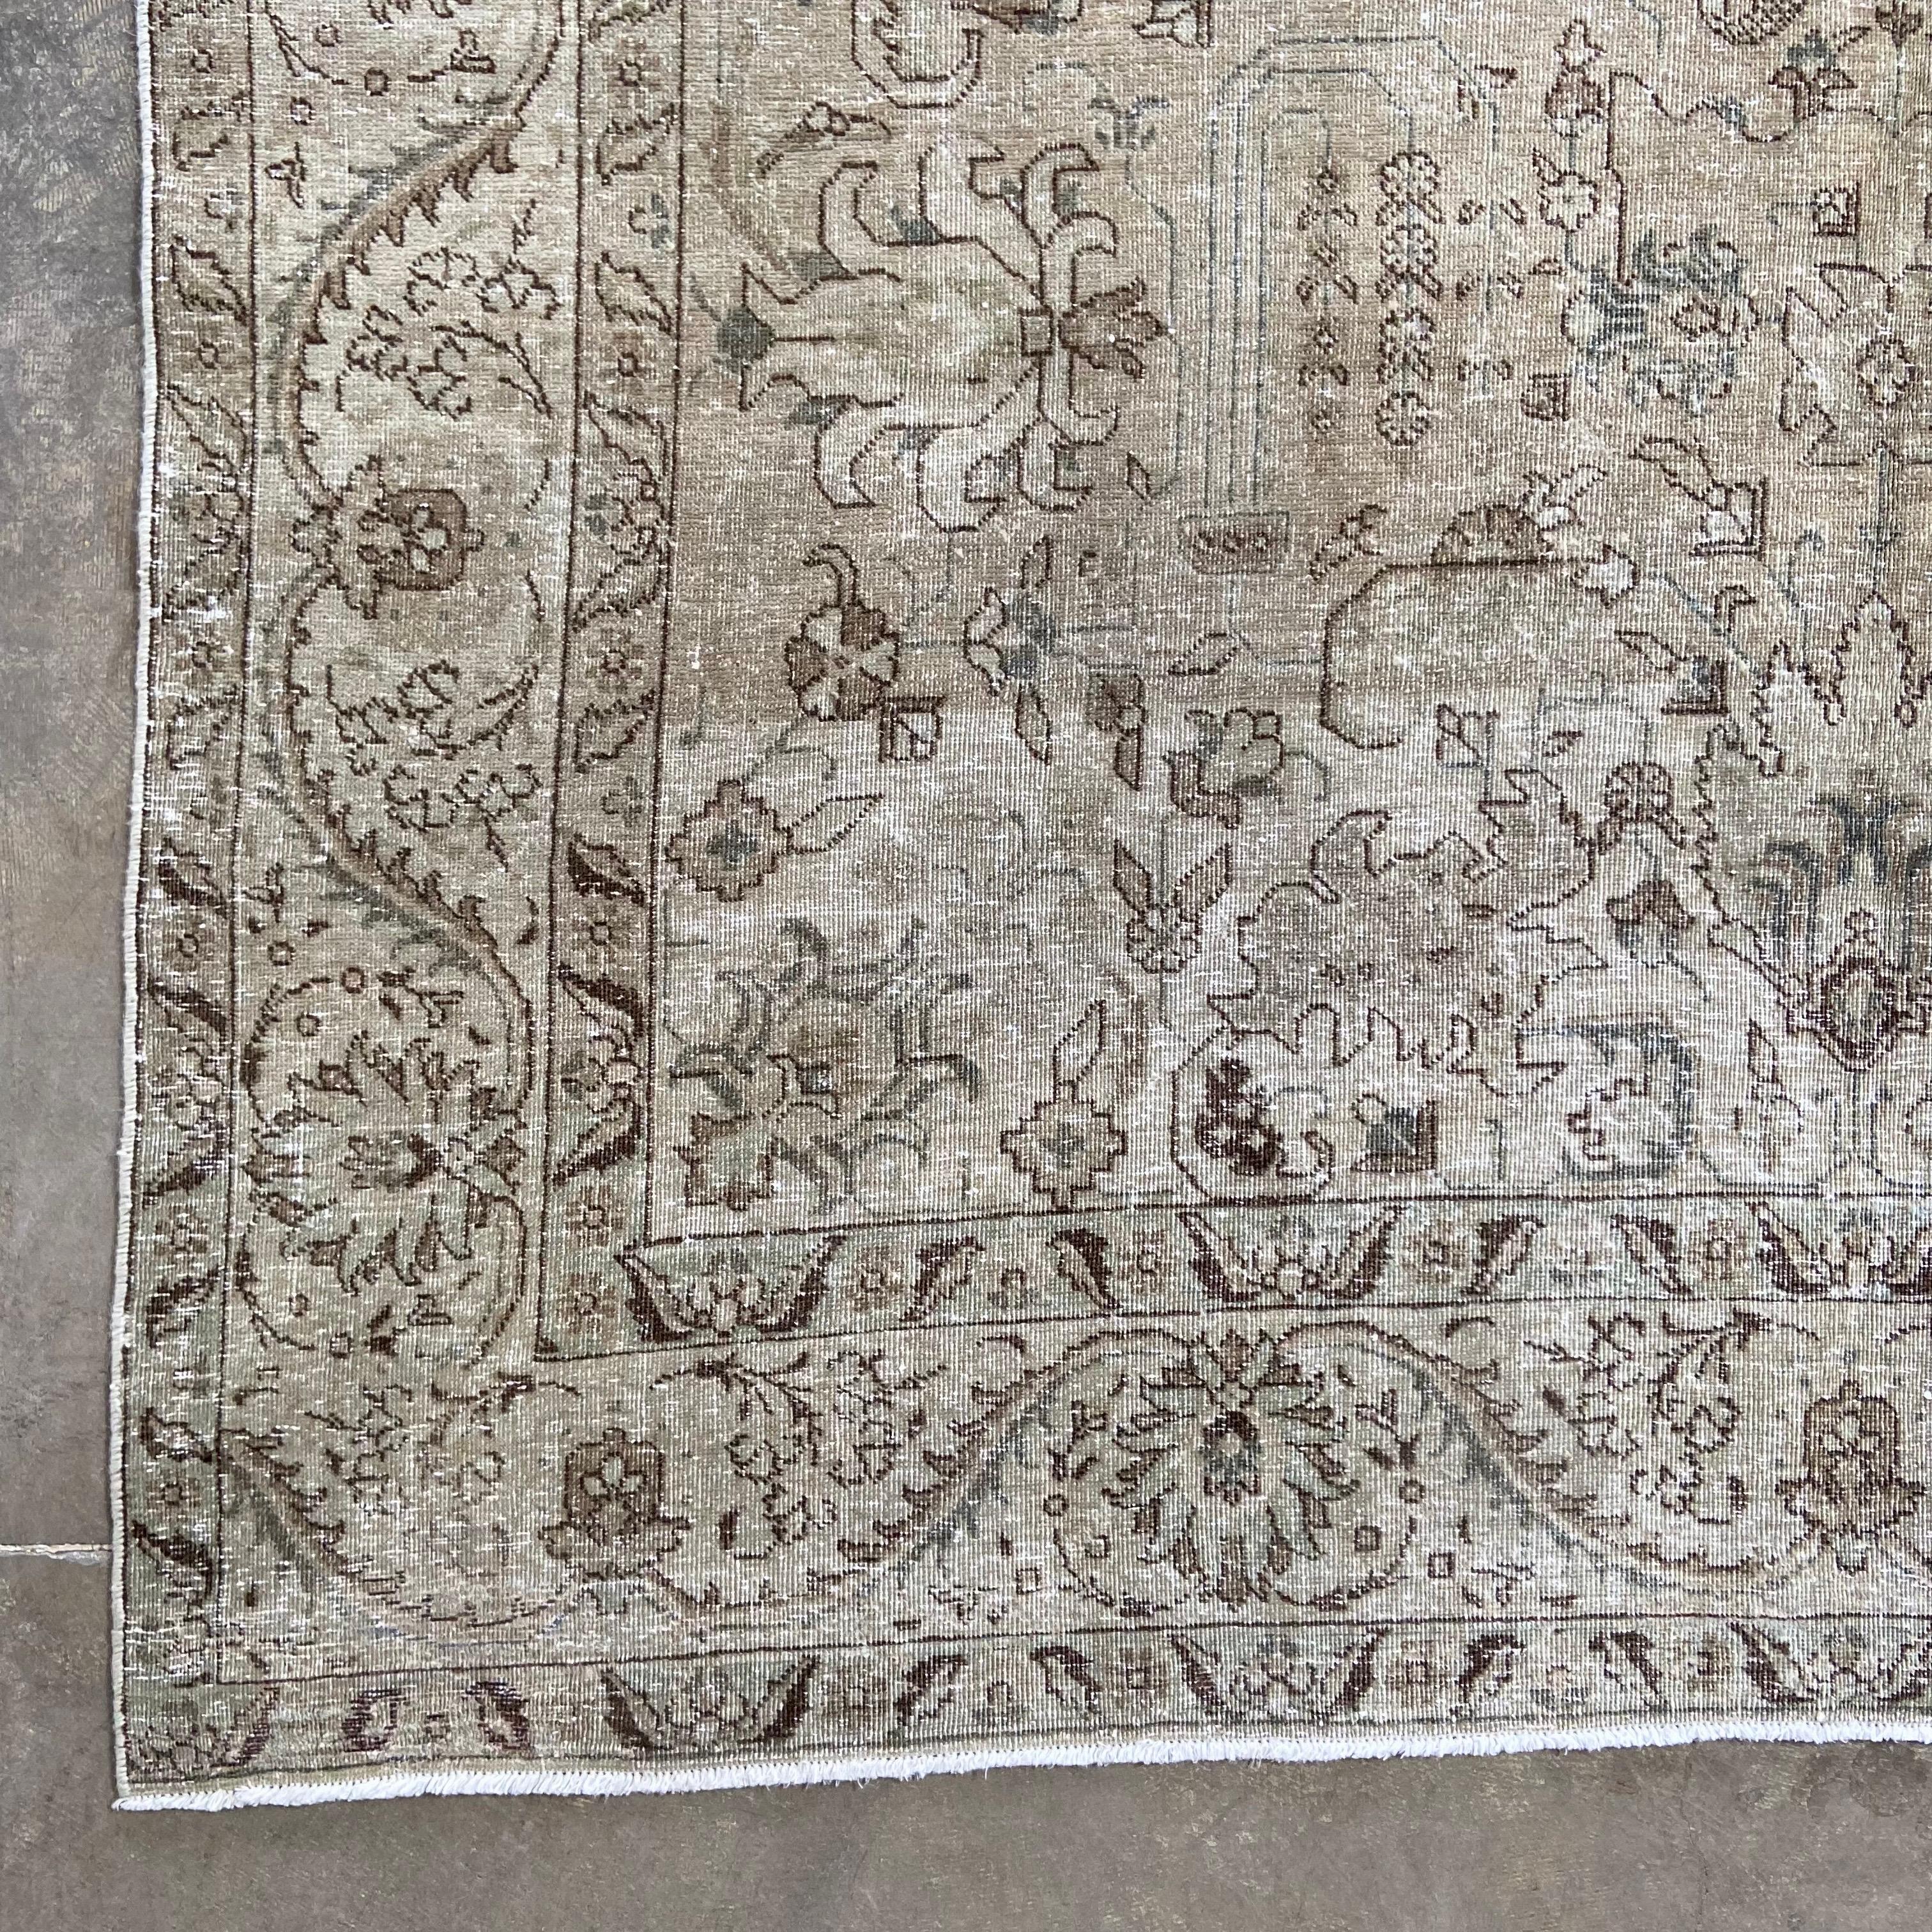 antique turkish rugs beverly hills